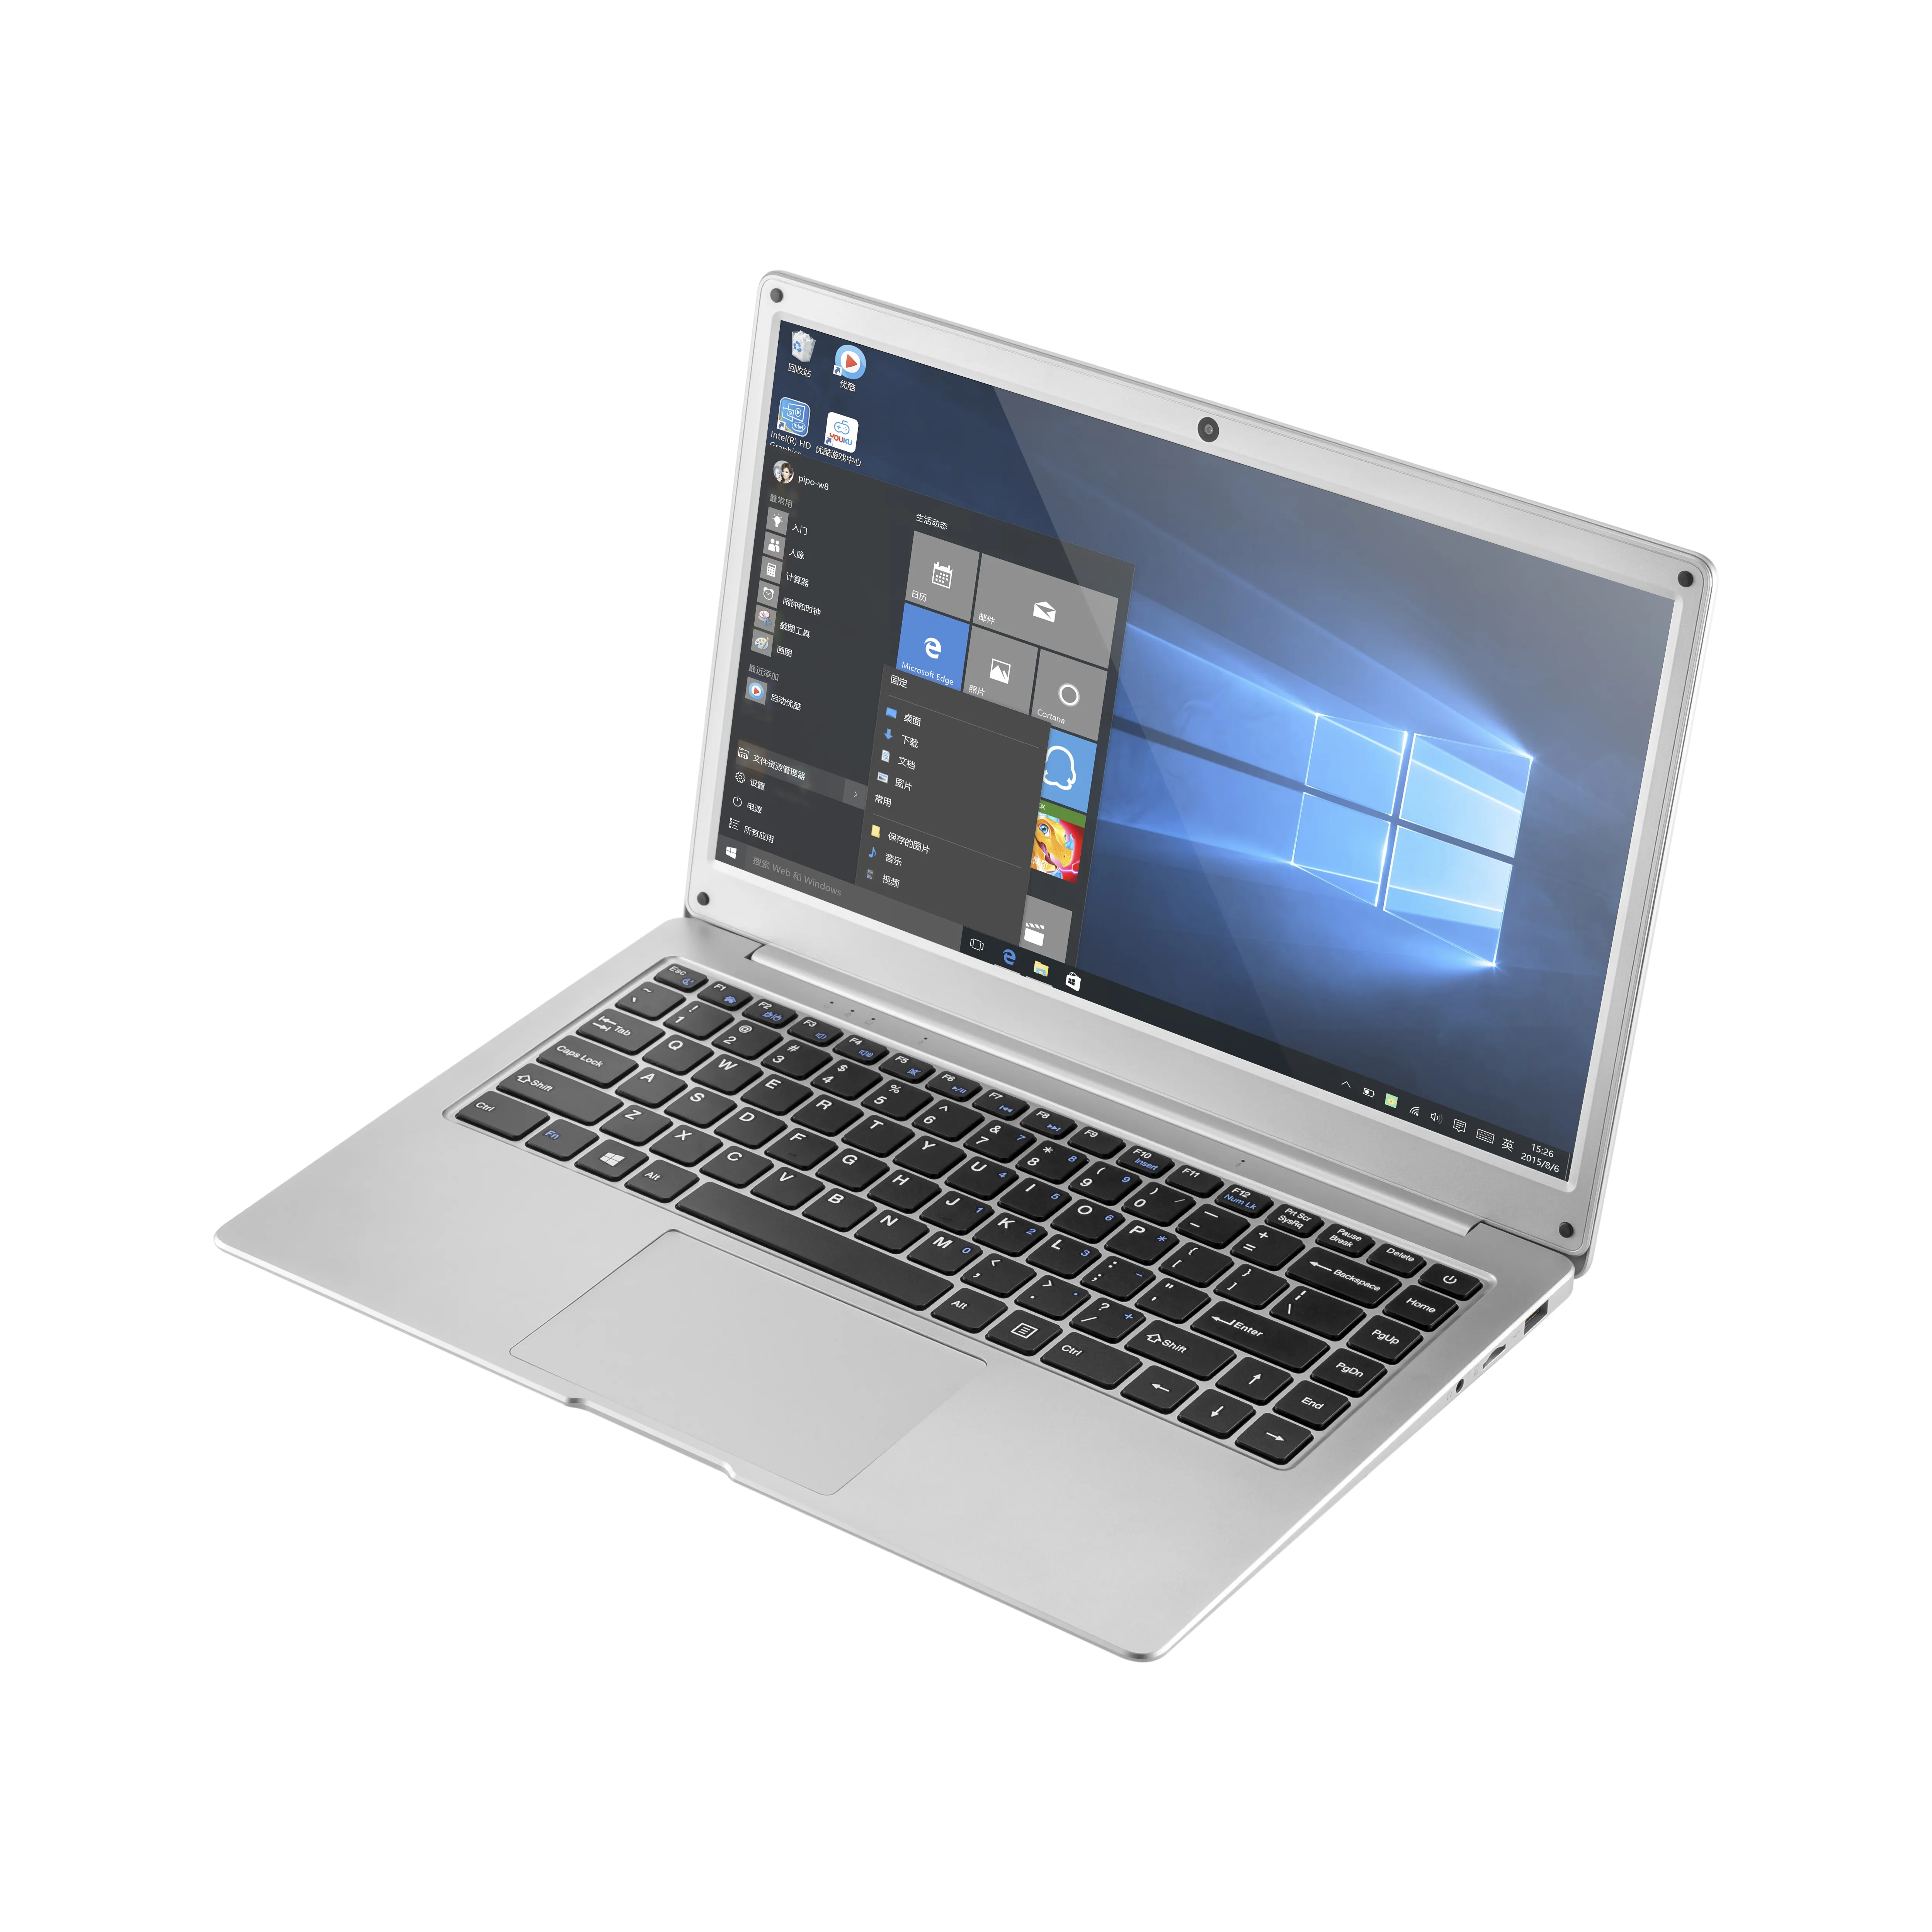 Pipo ขายดีที่สุด Celeron Quad Core ราคาถูกคอมพิวเตอร์แล็ปท็อปบาง Windows 11 14.1นิ้วแล็ปท็อปผู้ผลิตล่าสุด